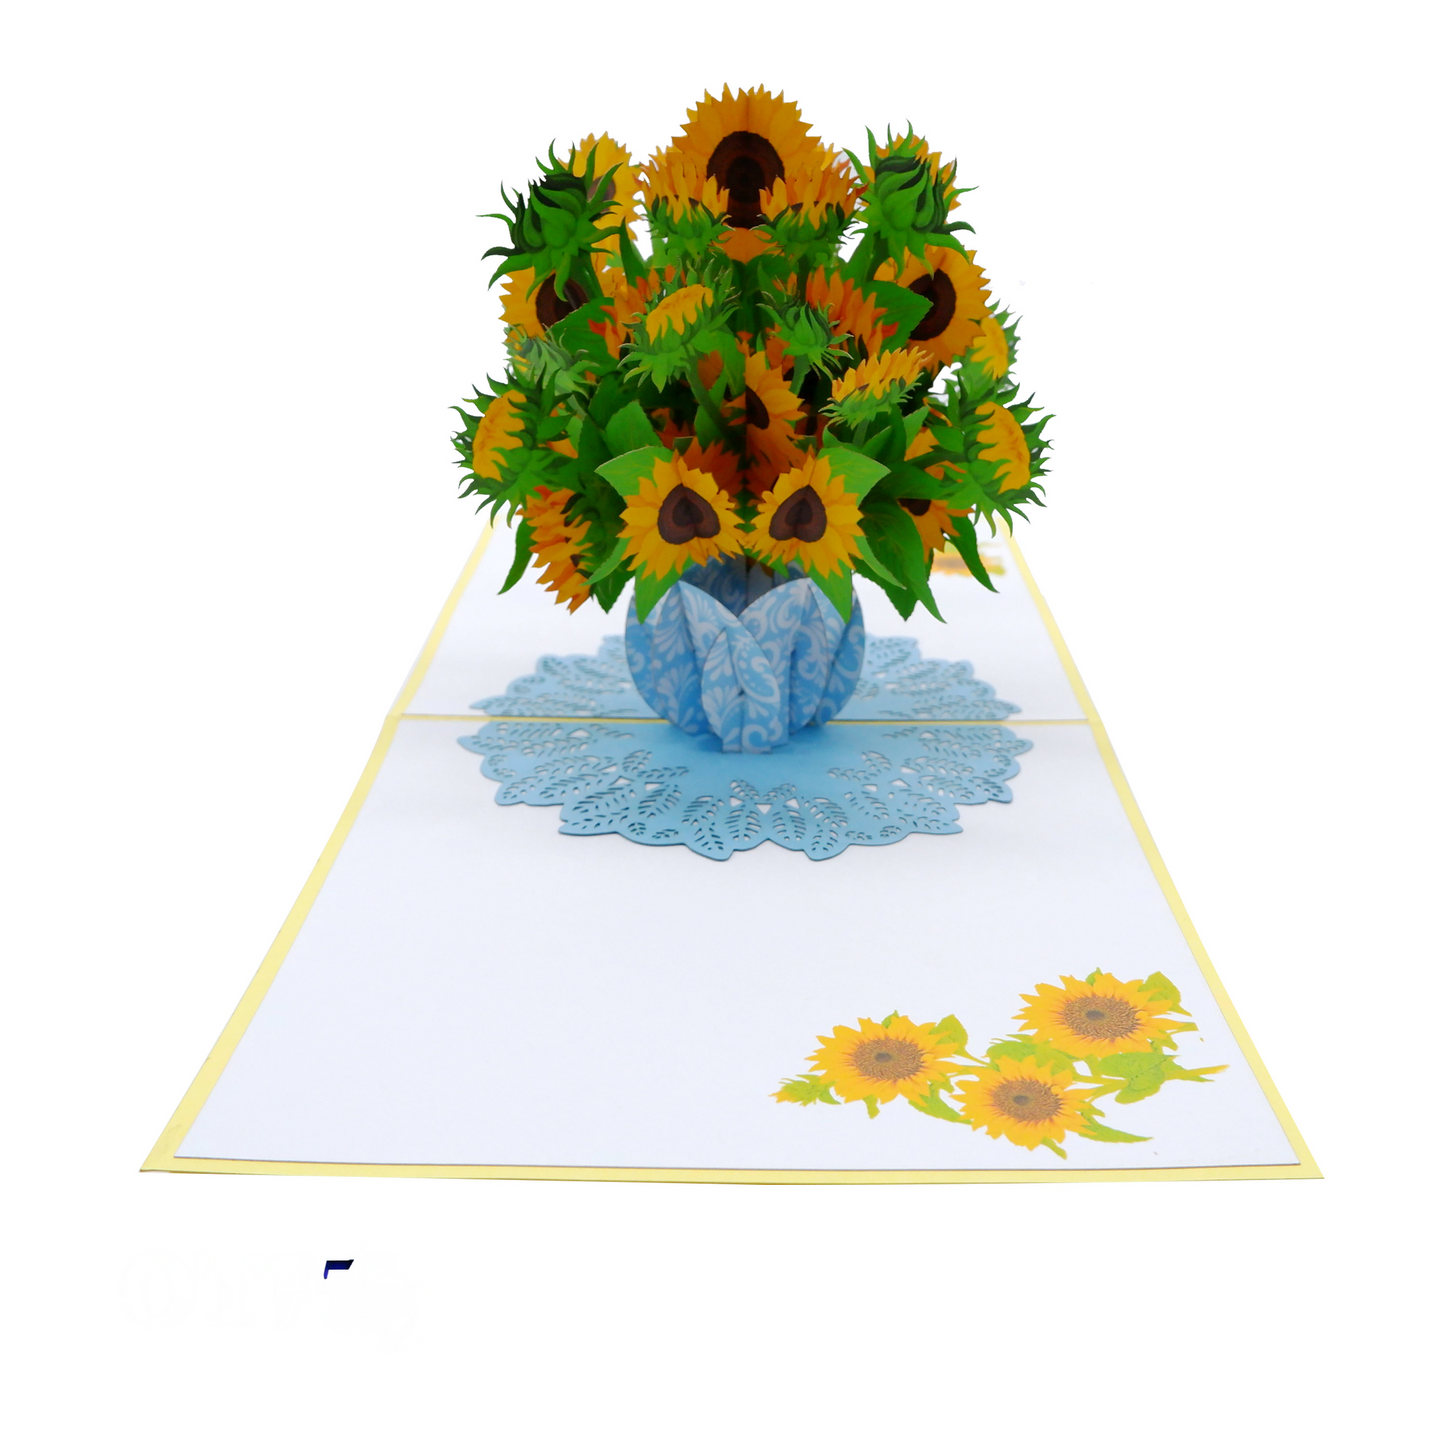 Sunflowers vase Pop Up Cards